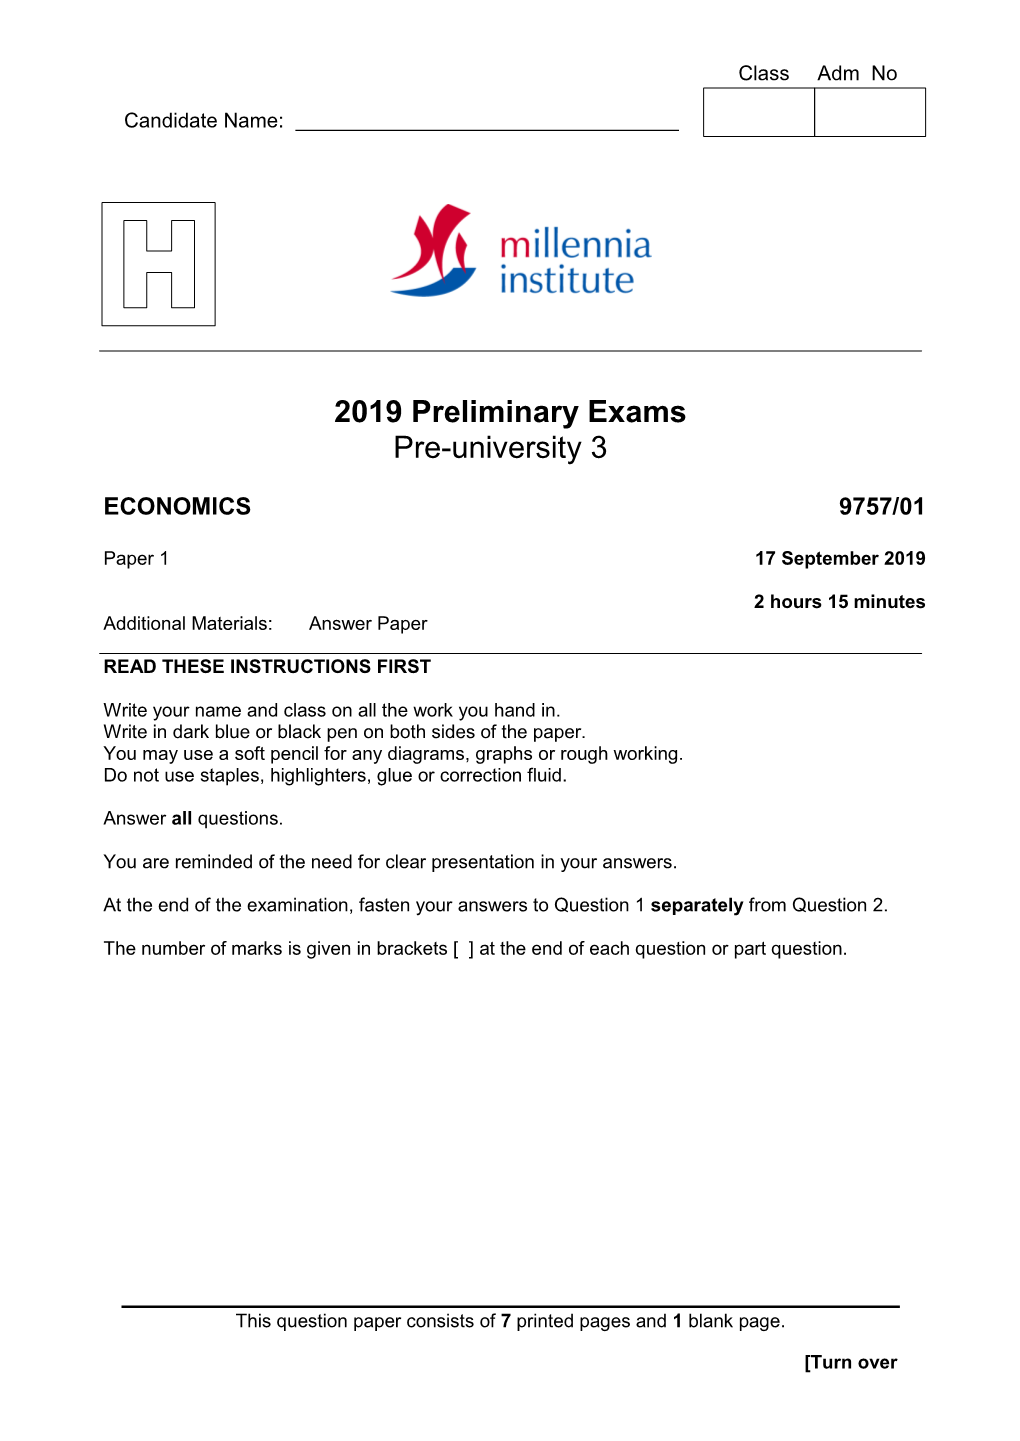 2019 Preliminary Exams Pre-University 3